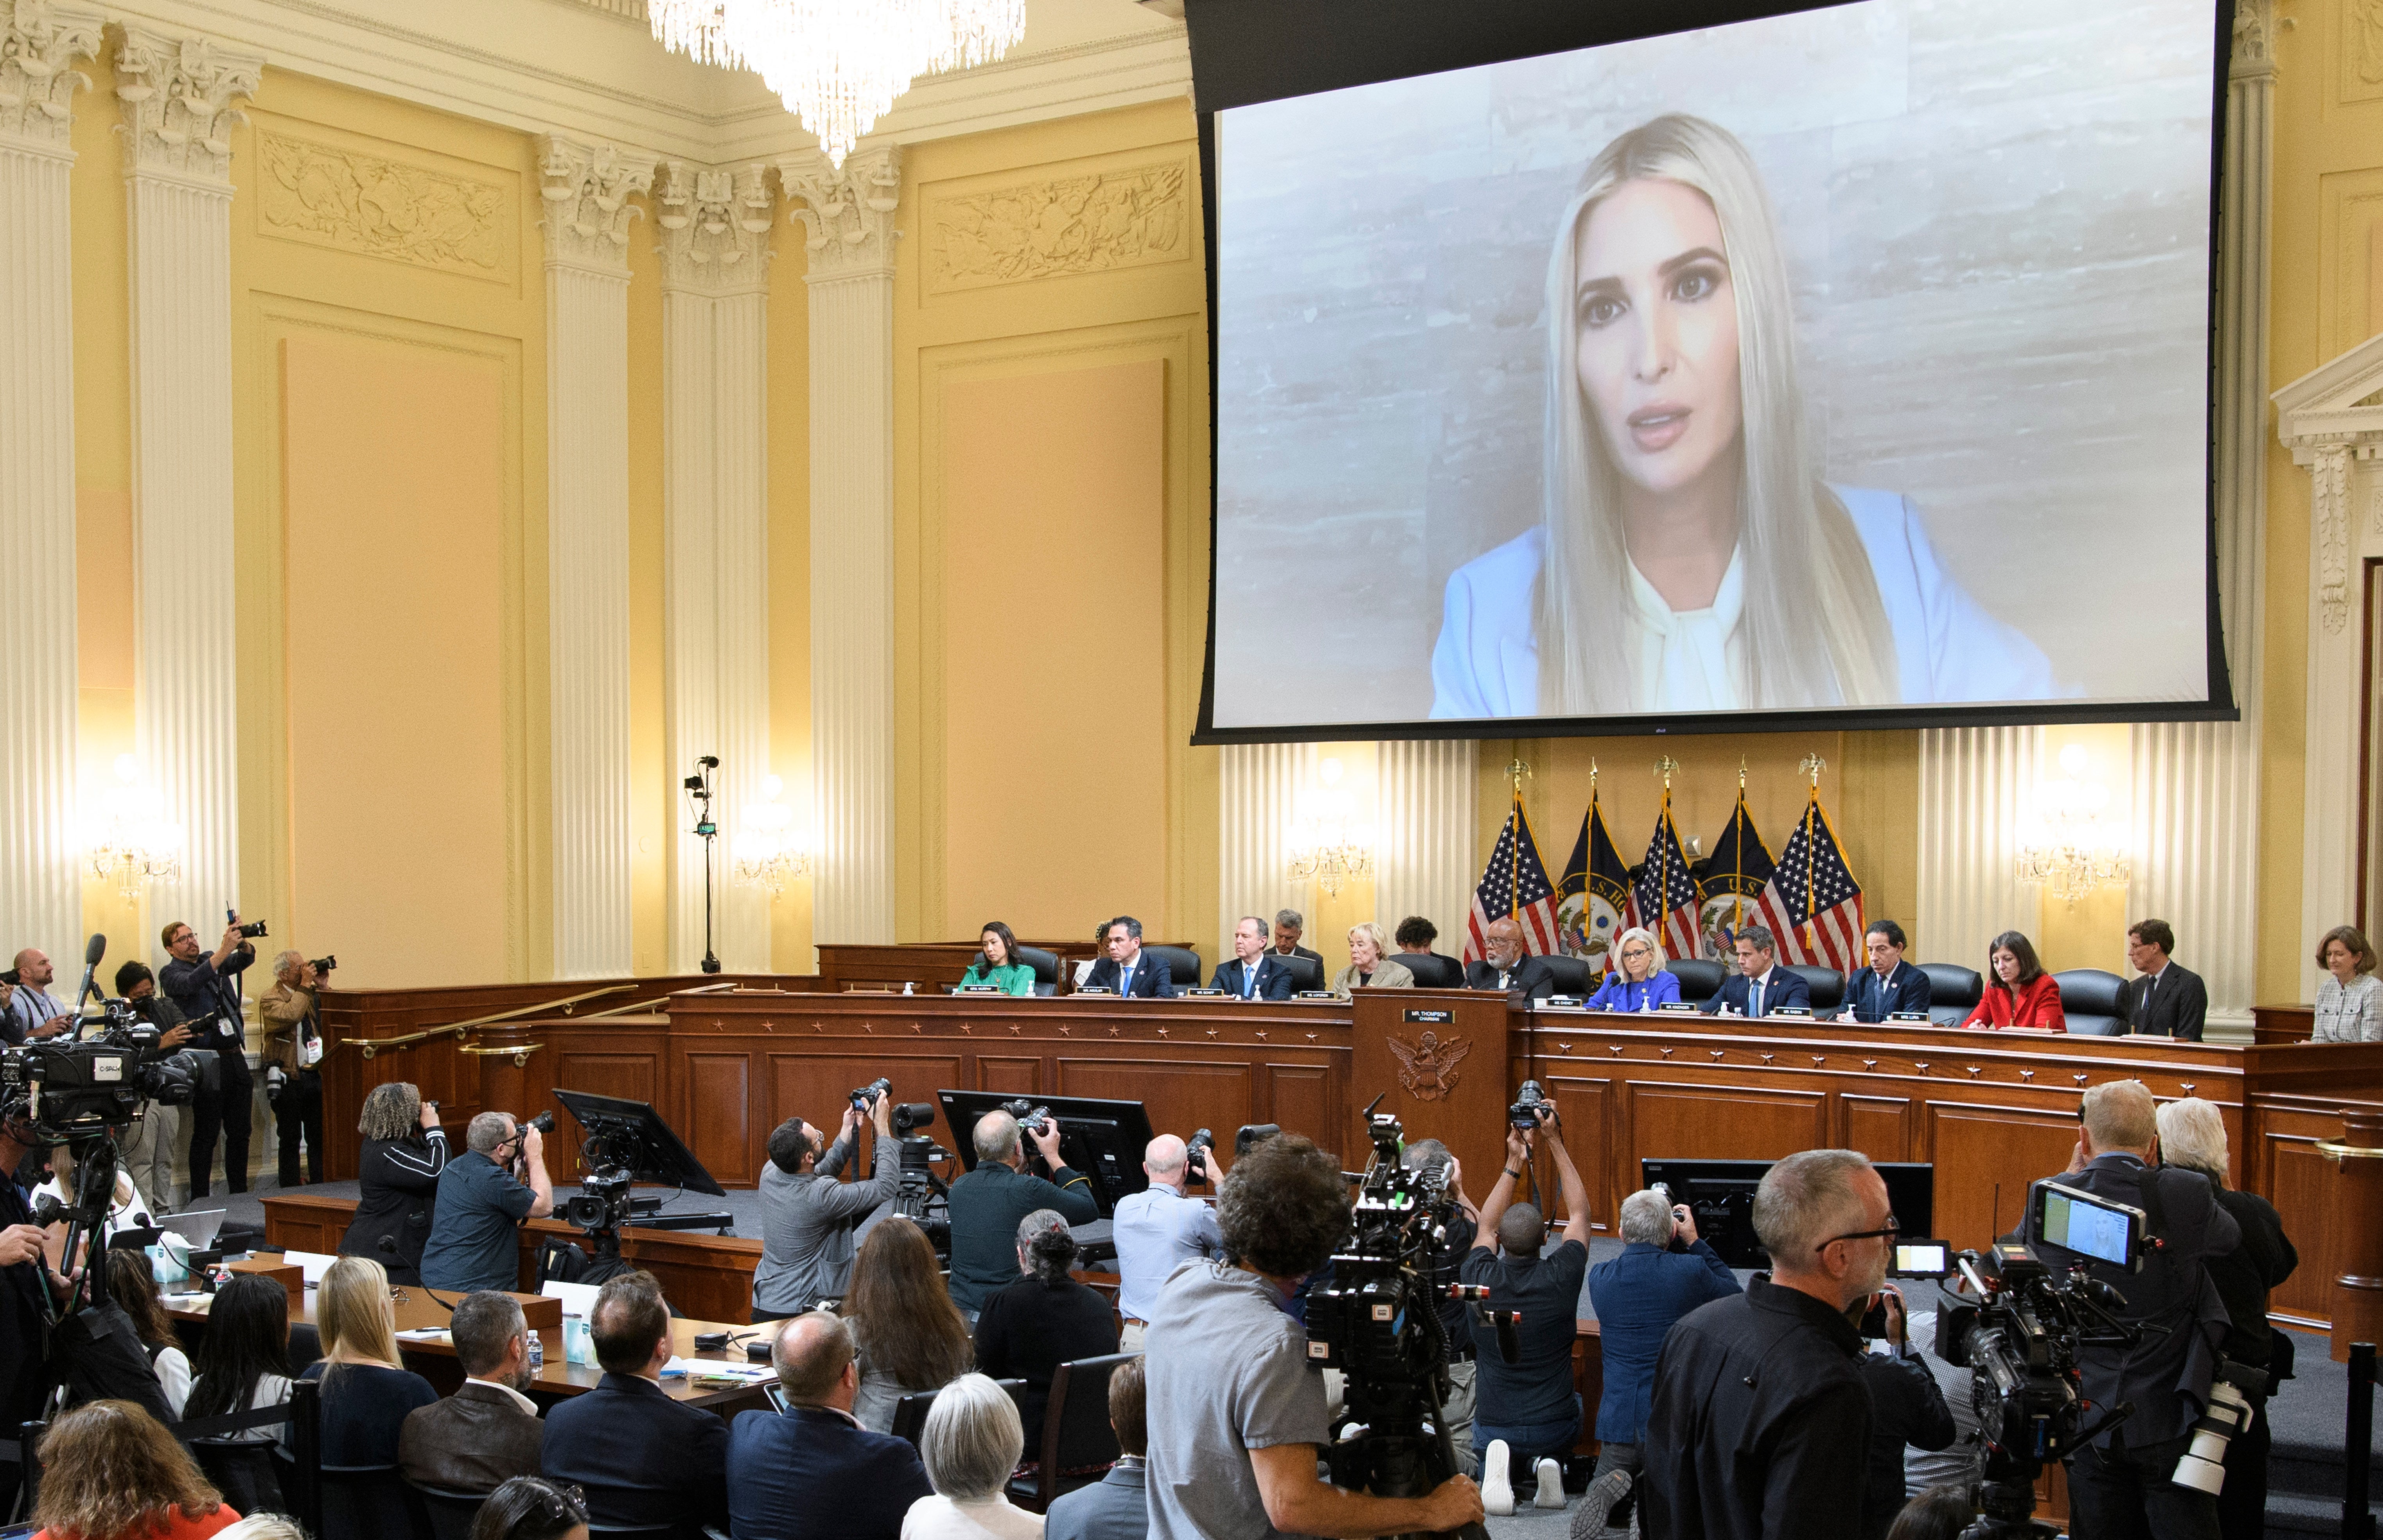 Ivanka Trump on screen during the January 6 hearing